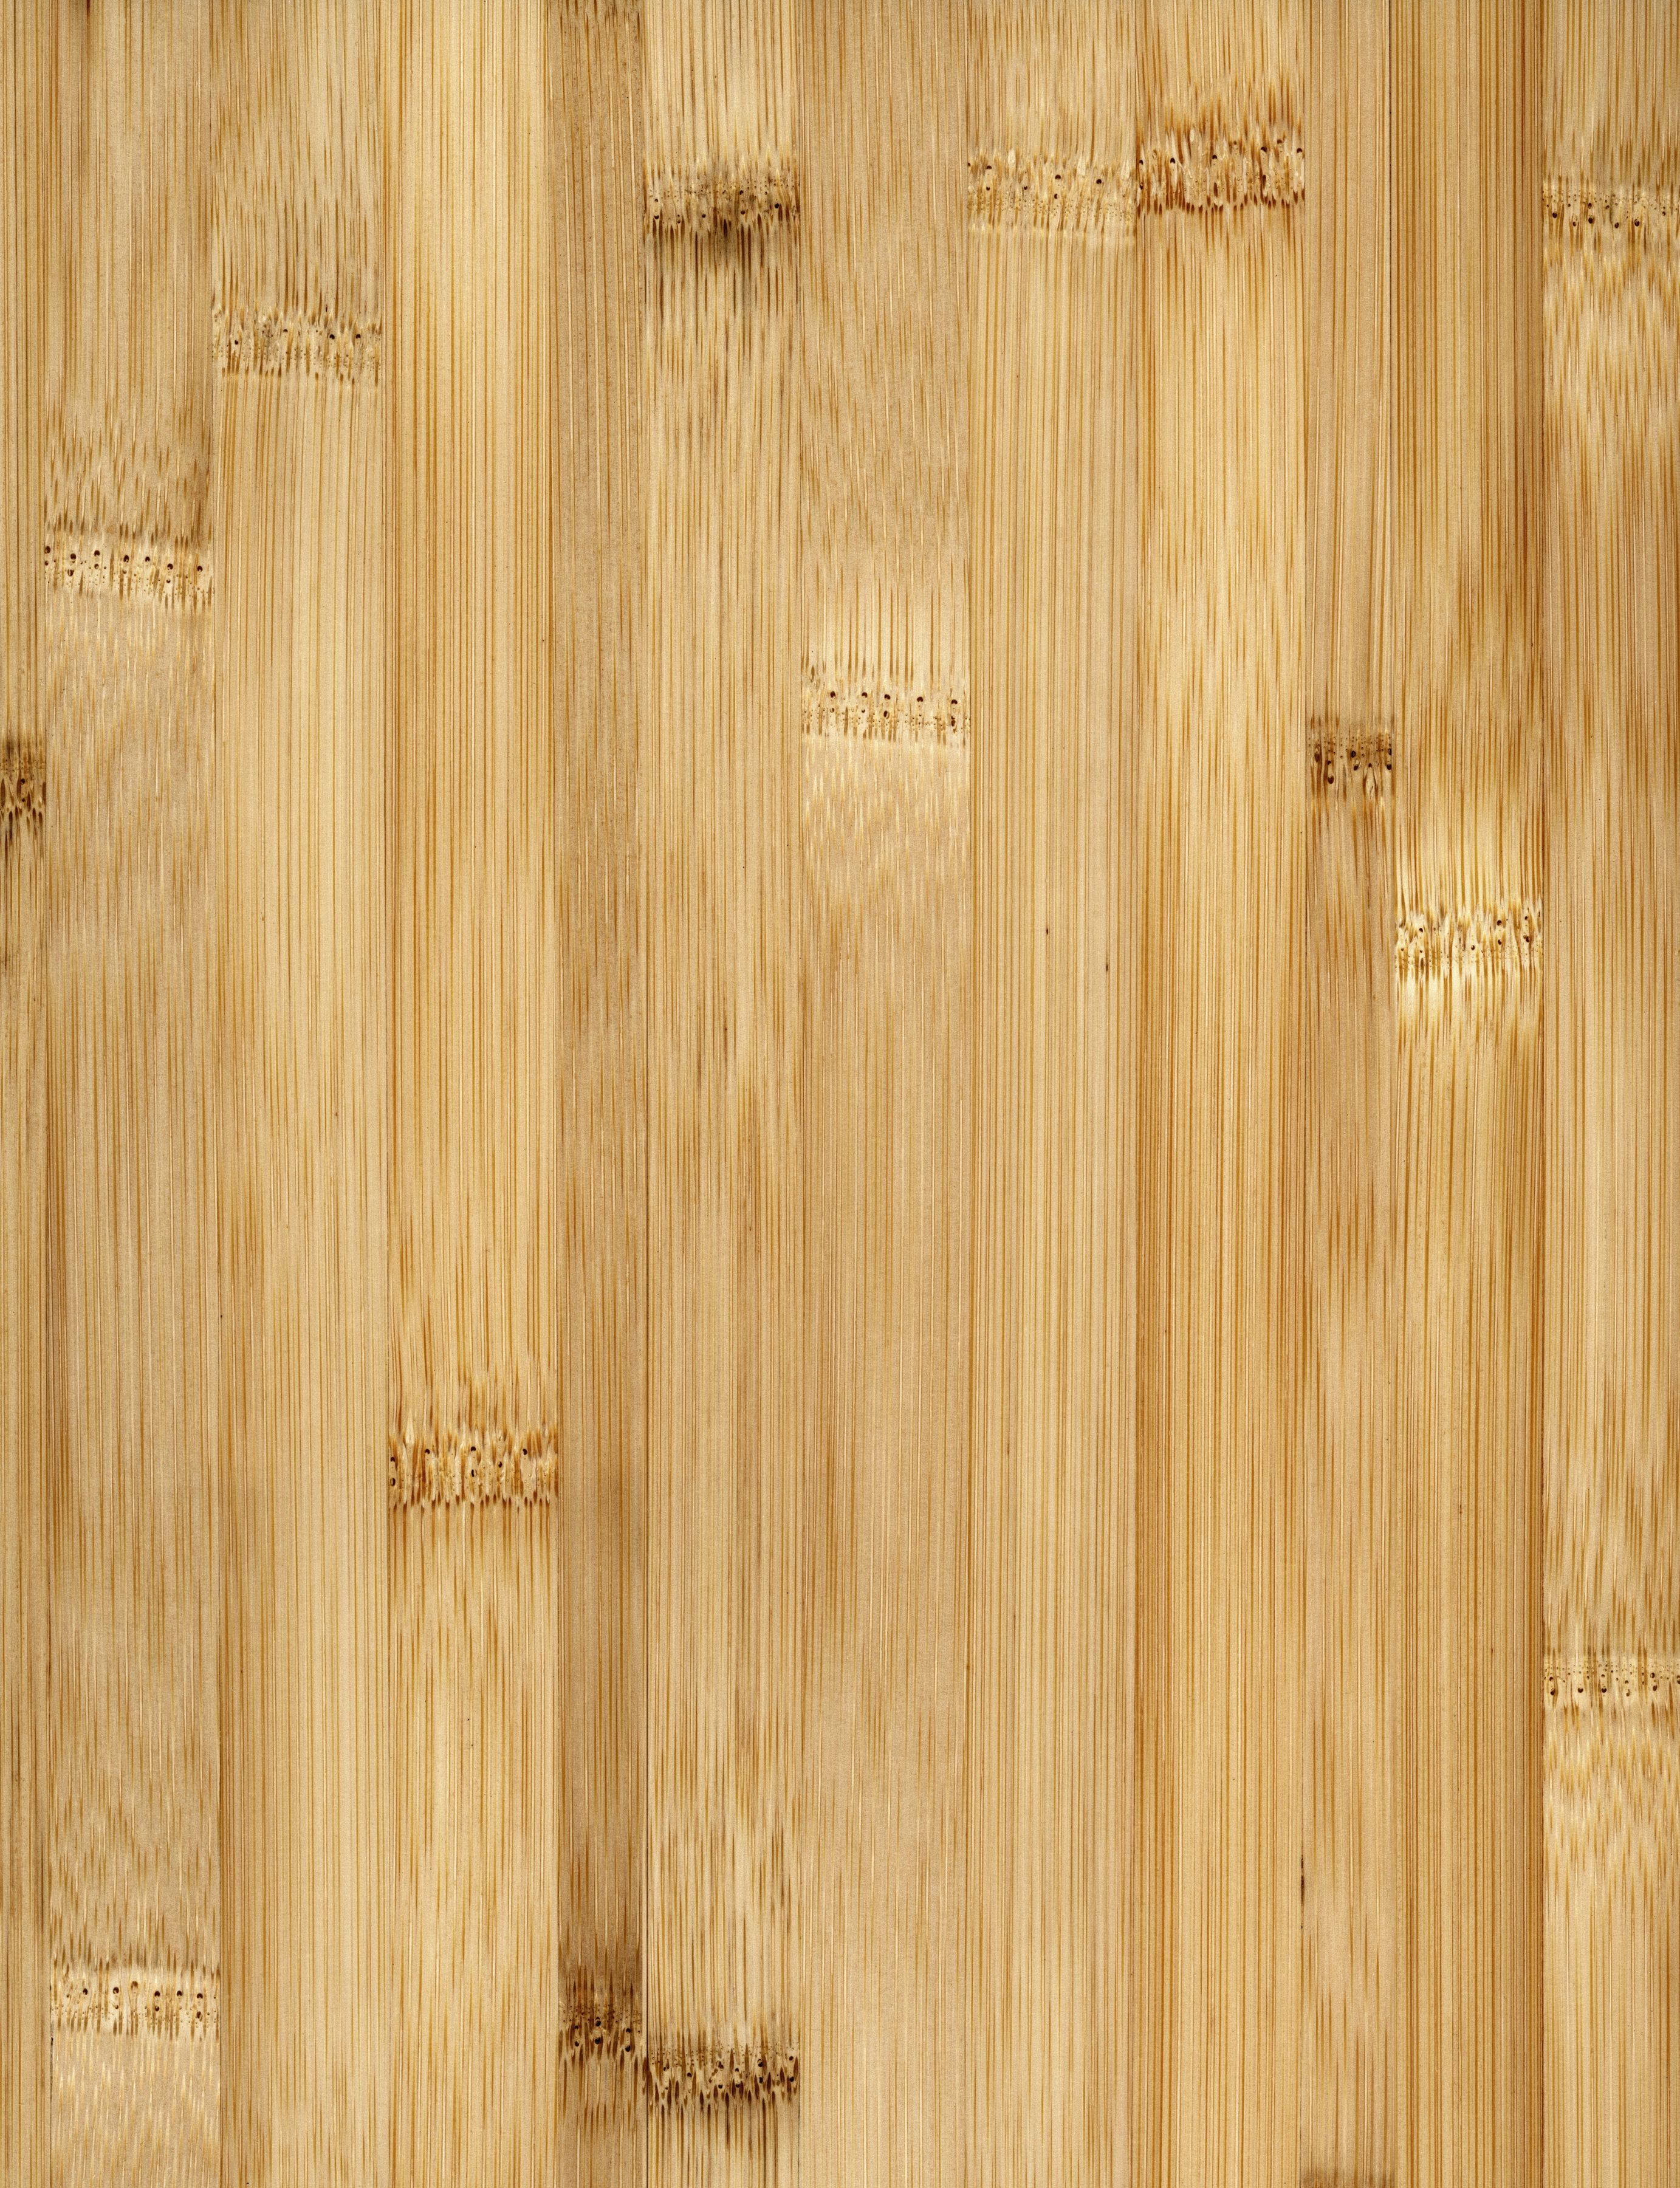 29 Stunning Bamboo Flooring or Engineered Hardwood 2024 free download bamboo flooring or engineered hardwood of bamboo flooring buying guide for bamboo floor full frame 200266305 001 59a4517bd963ac00118a3d9f